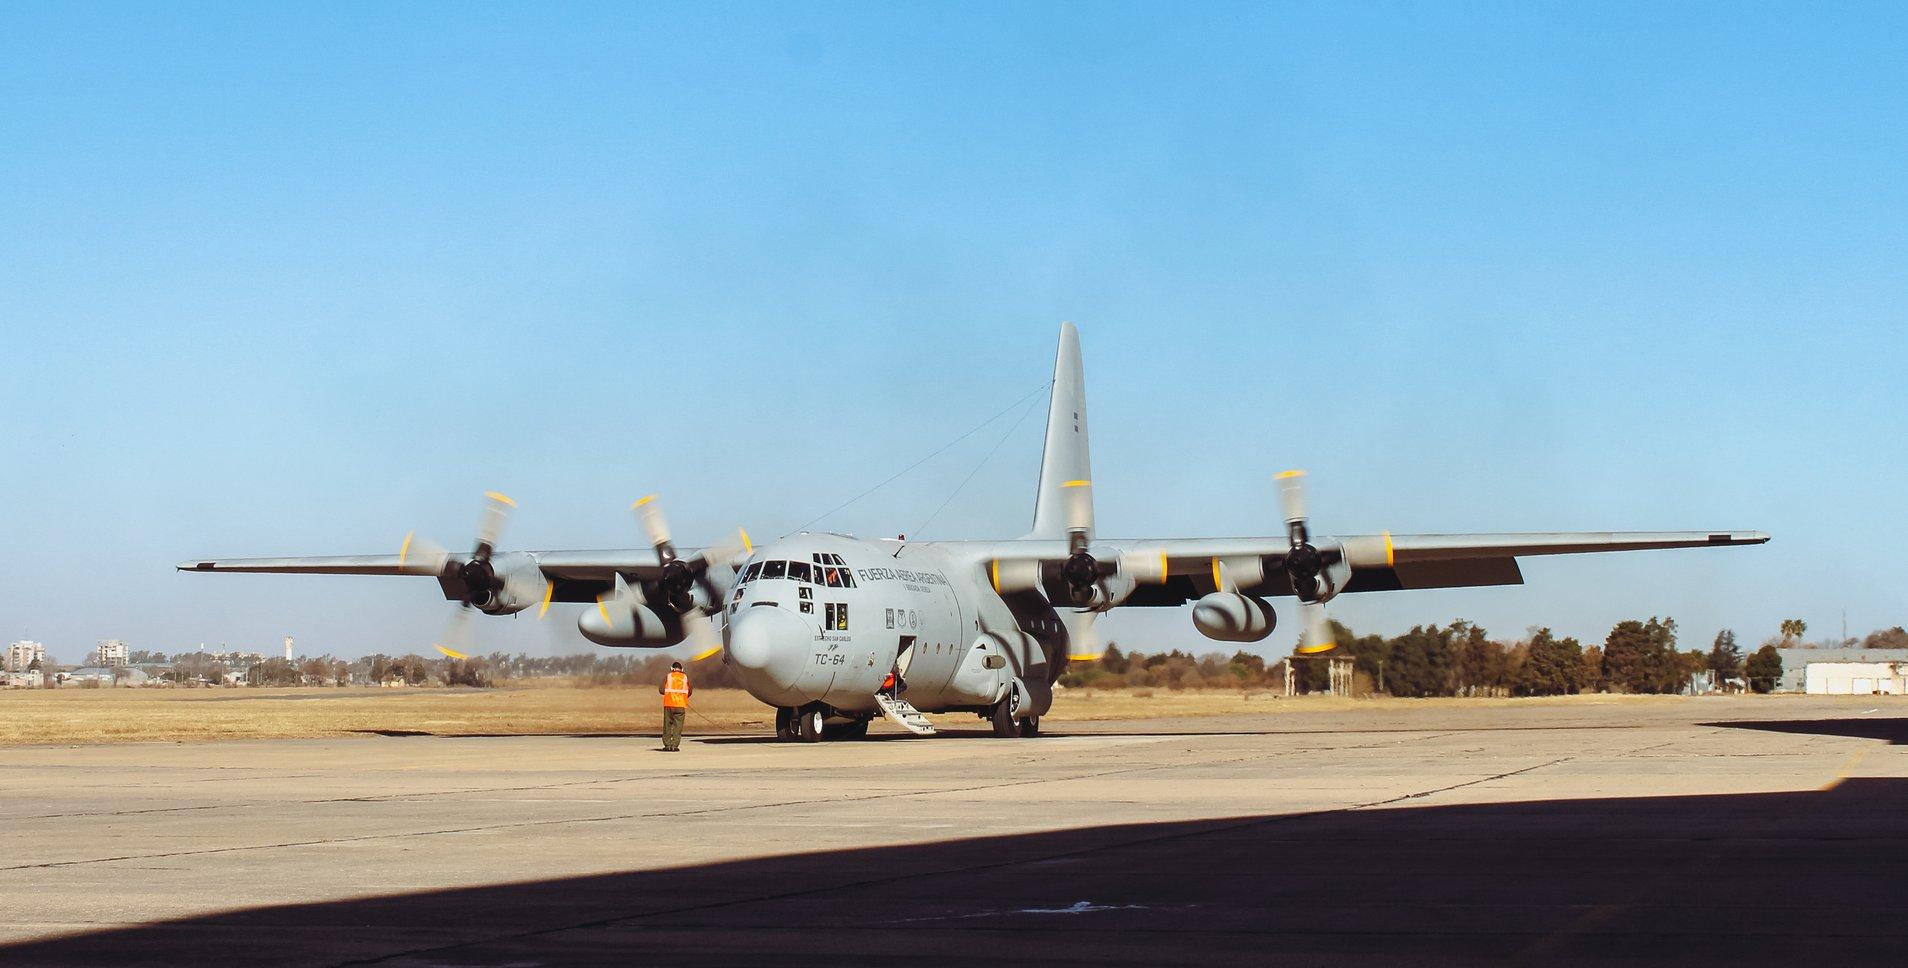 Fifth upgraded C-130 Hercules in FAdeA’s facilities. 